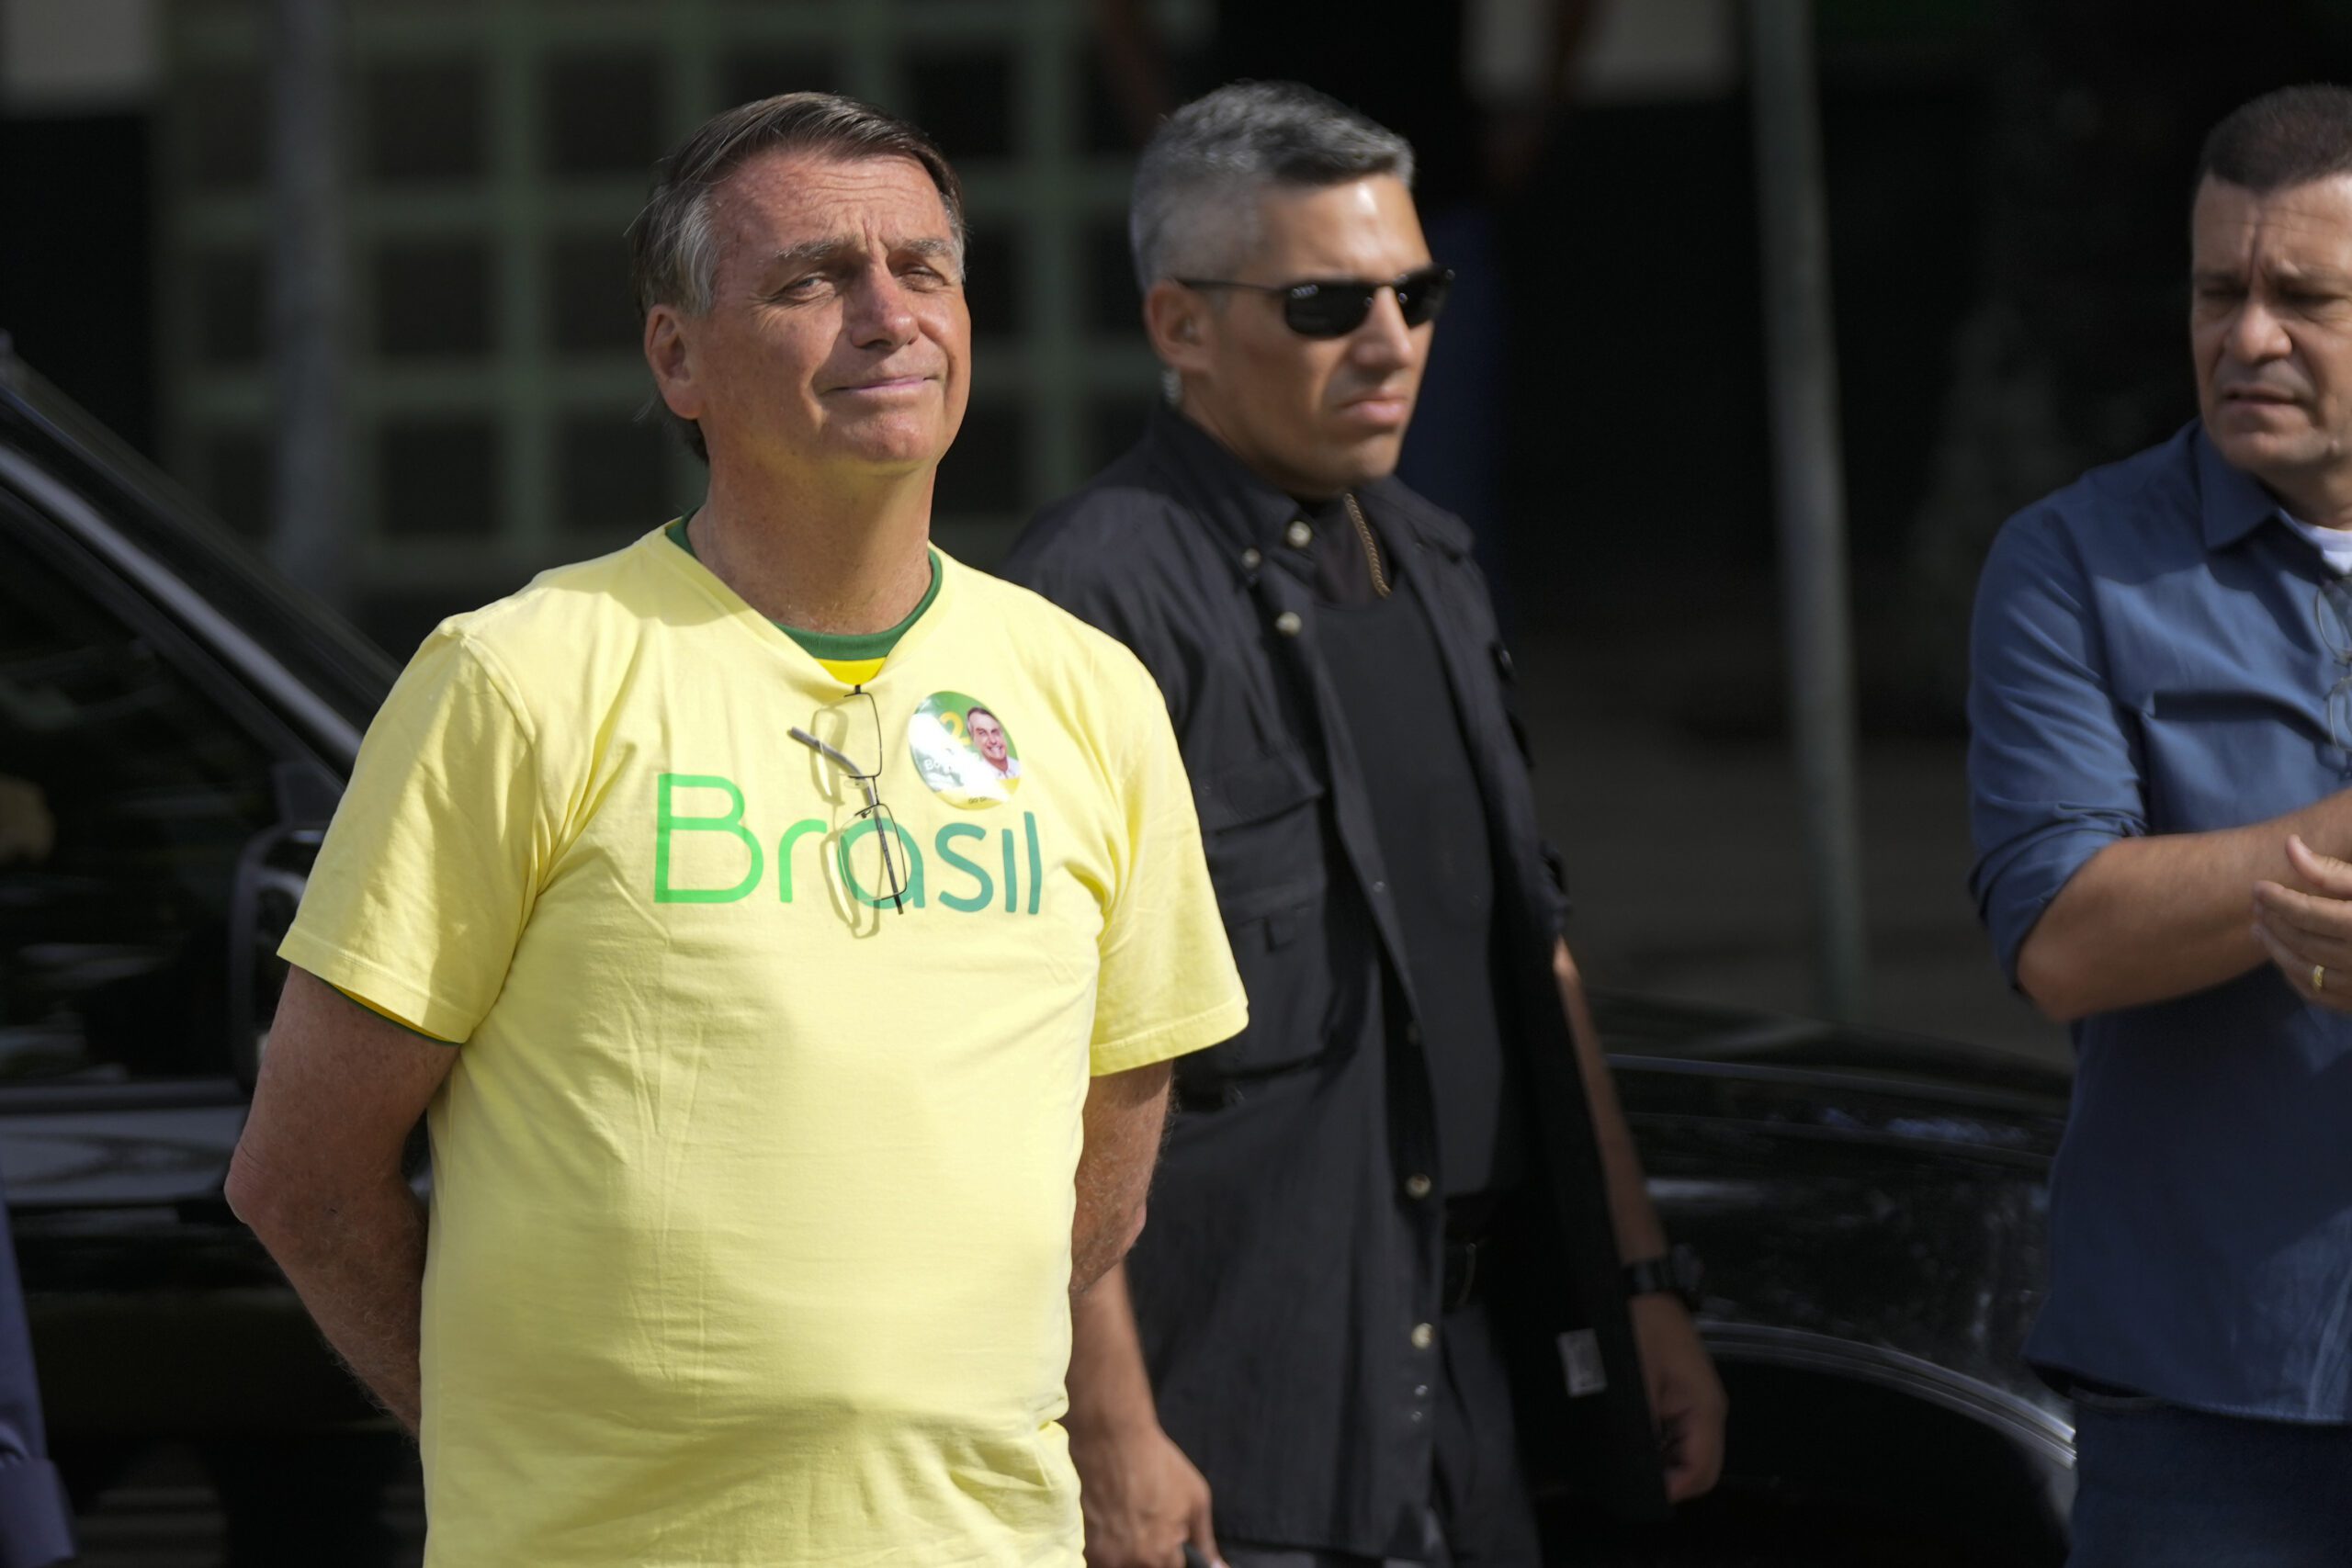 brazil’s-brash-president-bolsonaro-mum-after-election-loss